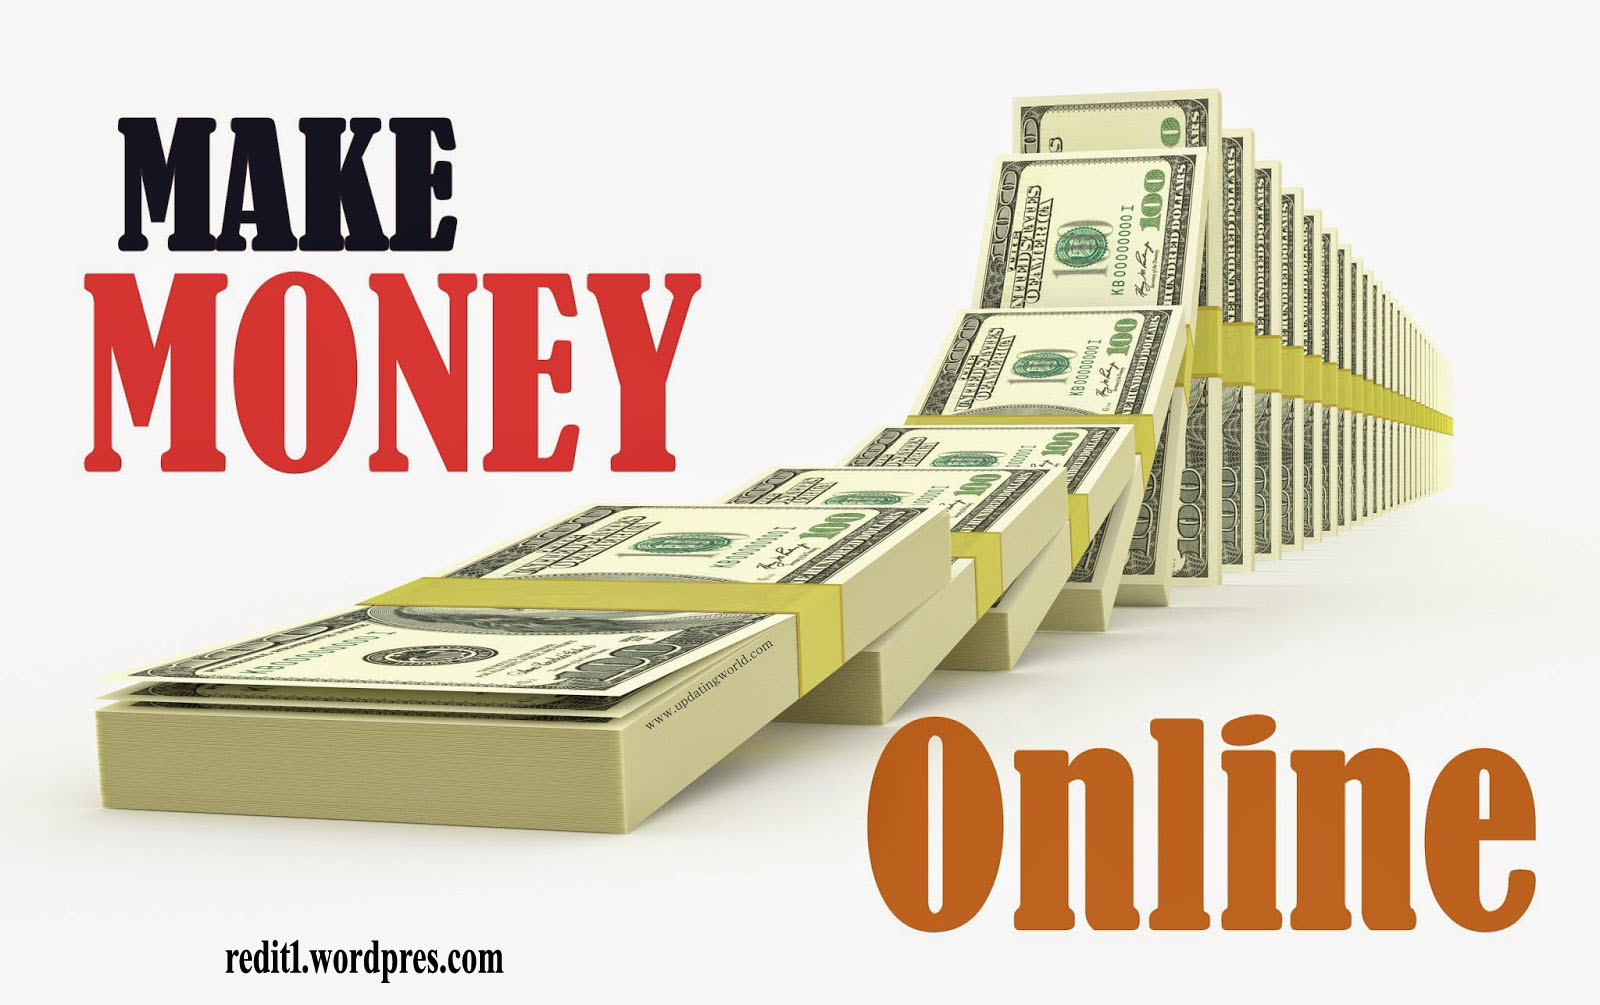 Make money make business. Make money. How to earn money.